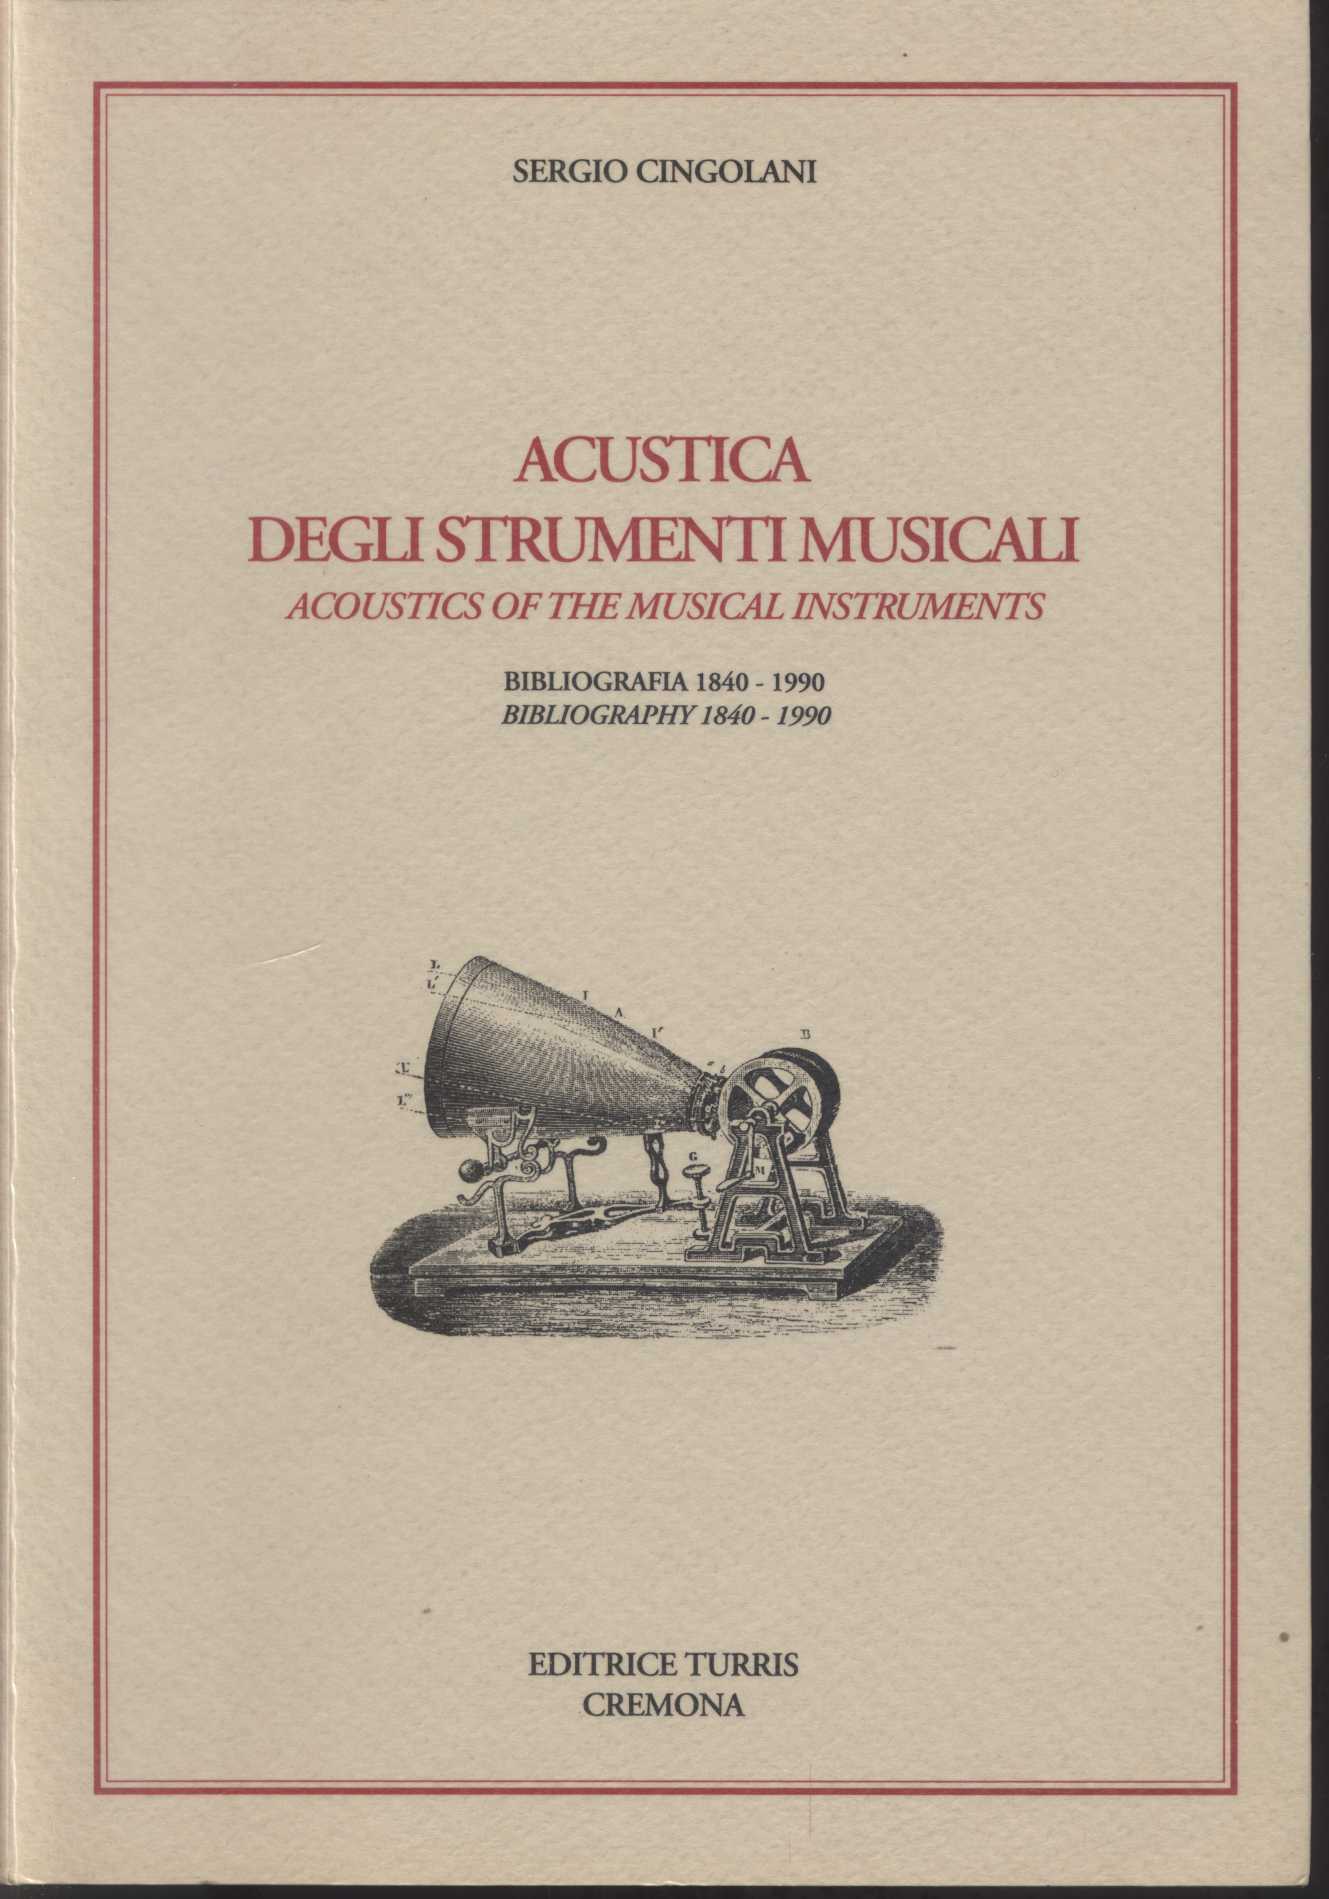 Acustica degli Strumenti Musicali – Acoustics of the Musical Instruments